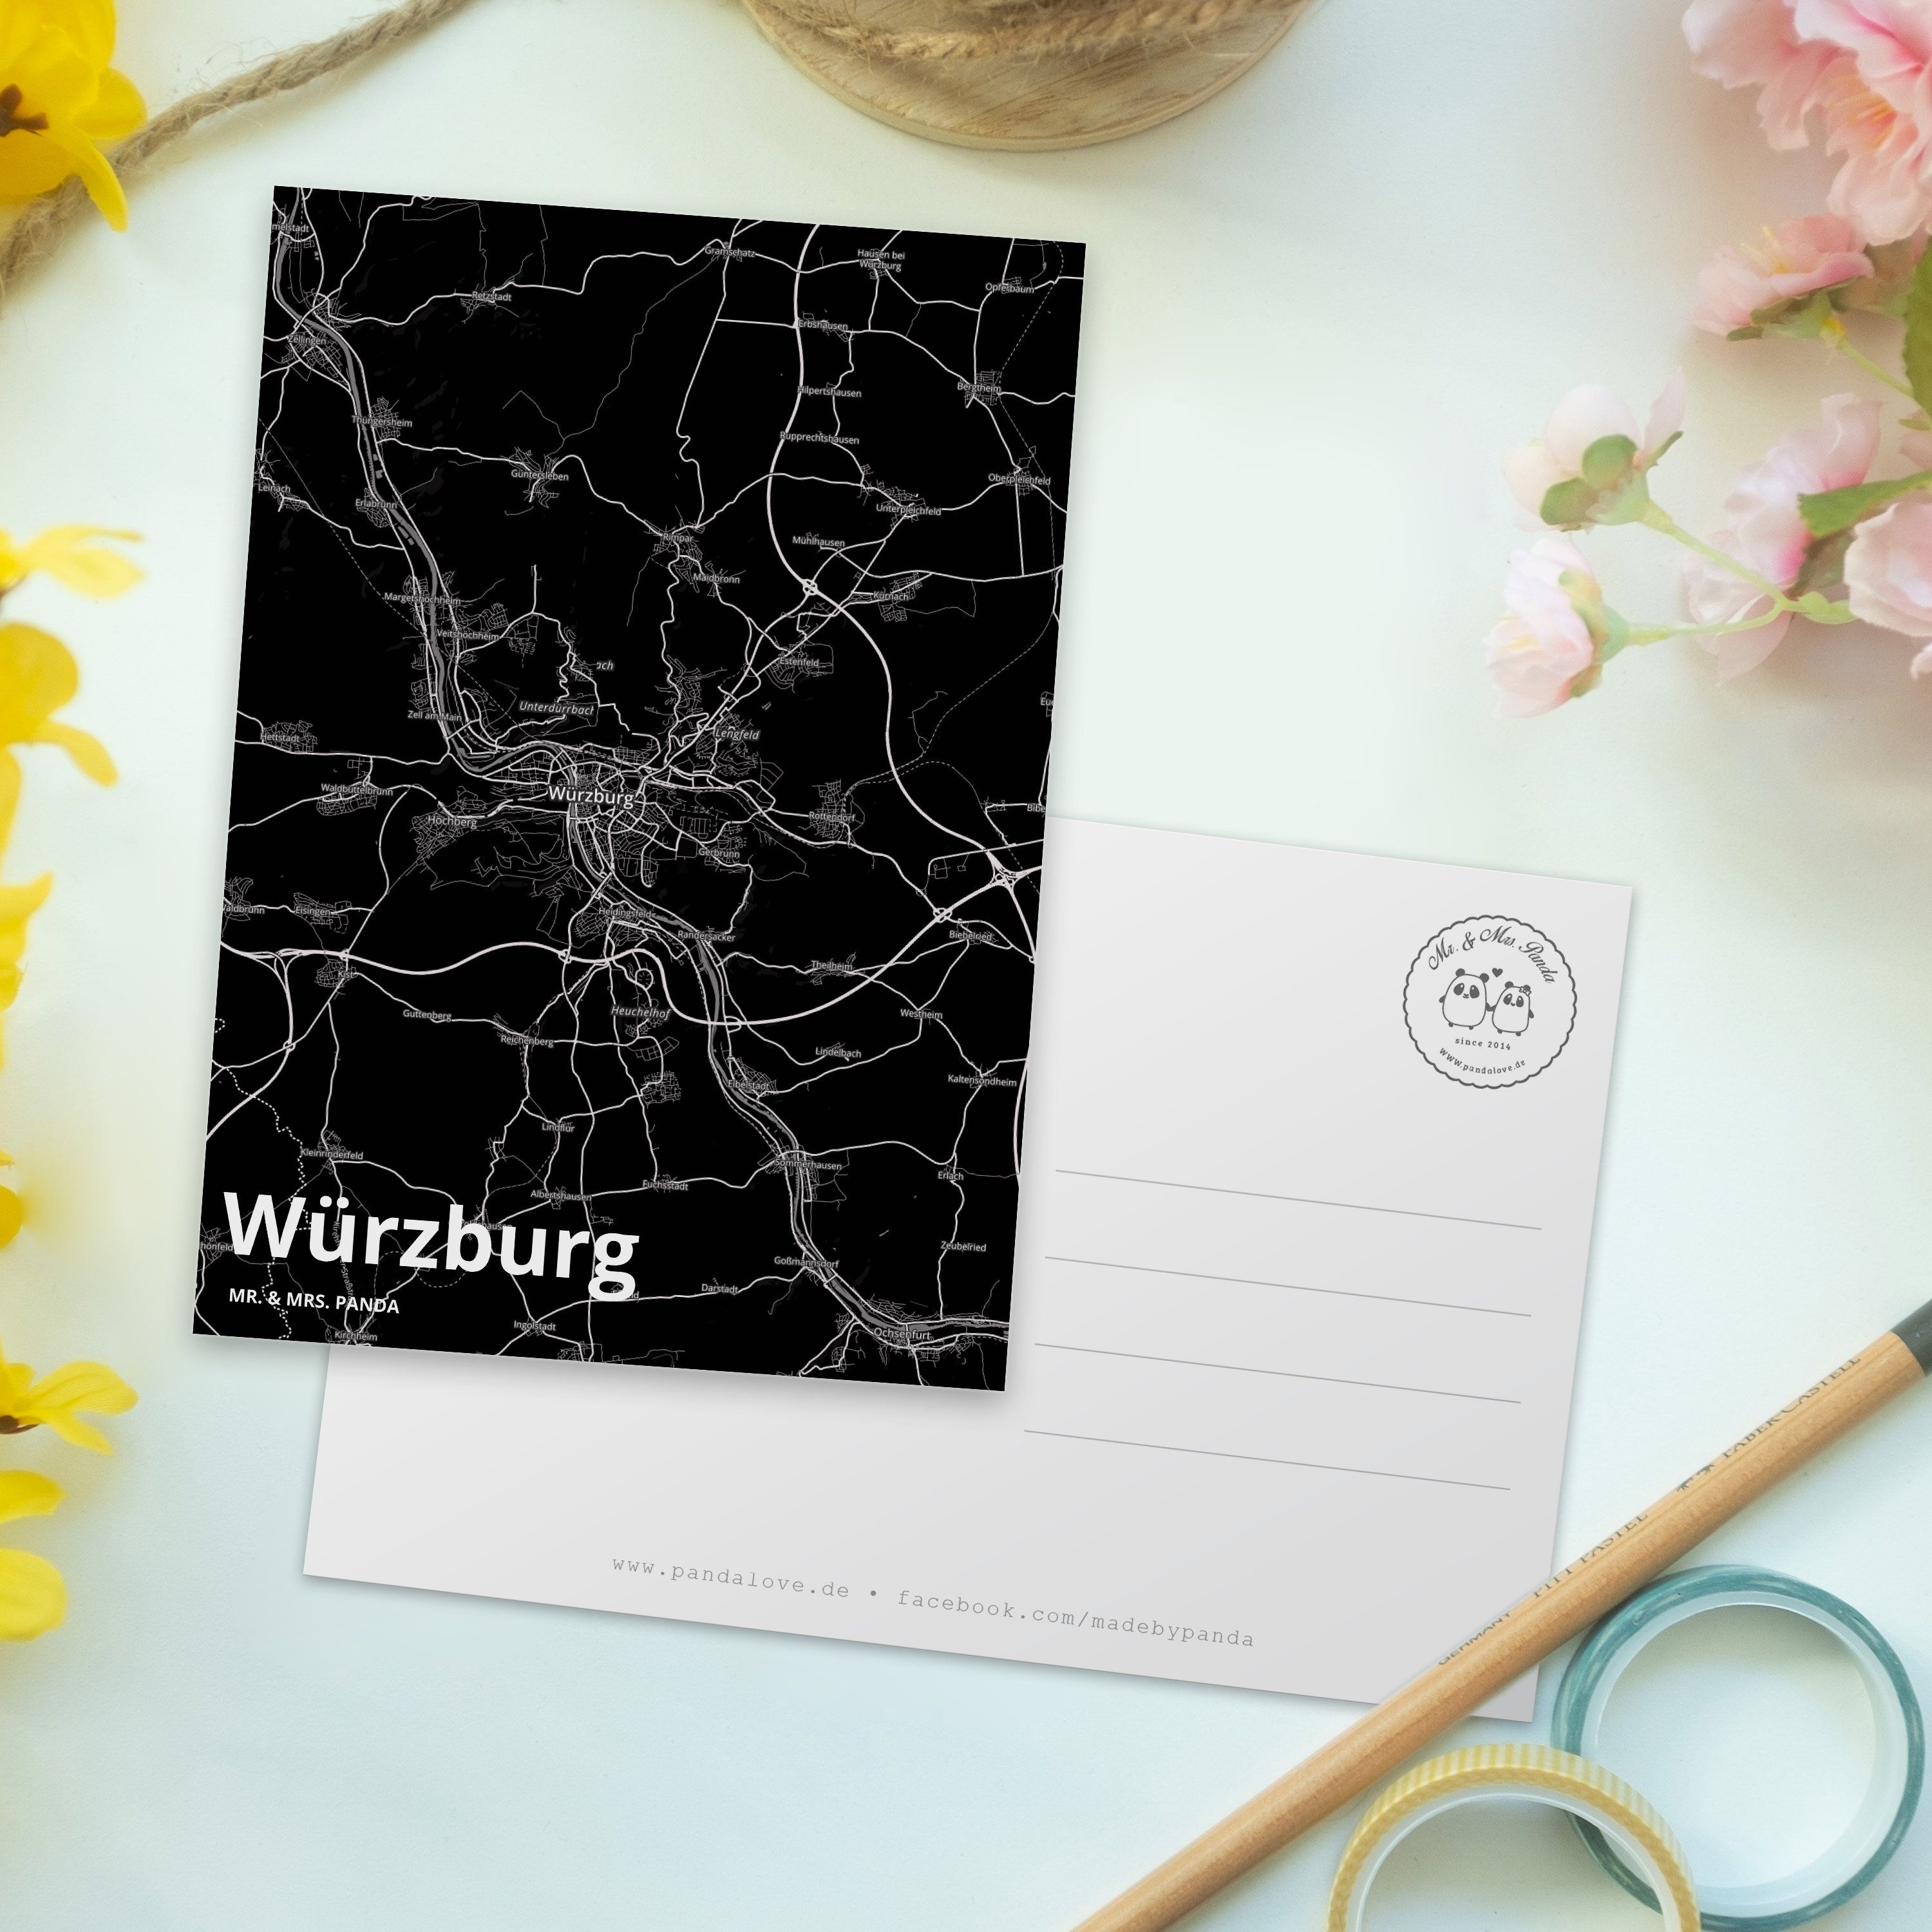 S Mr. Geschenk, & Grußkarte, Panda Map Ort, Würzburg Postkarte - Dorf Stadt Mrs. Karte Landkarte